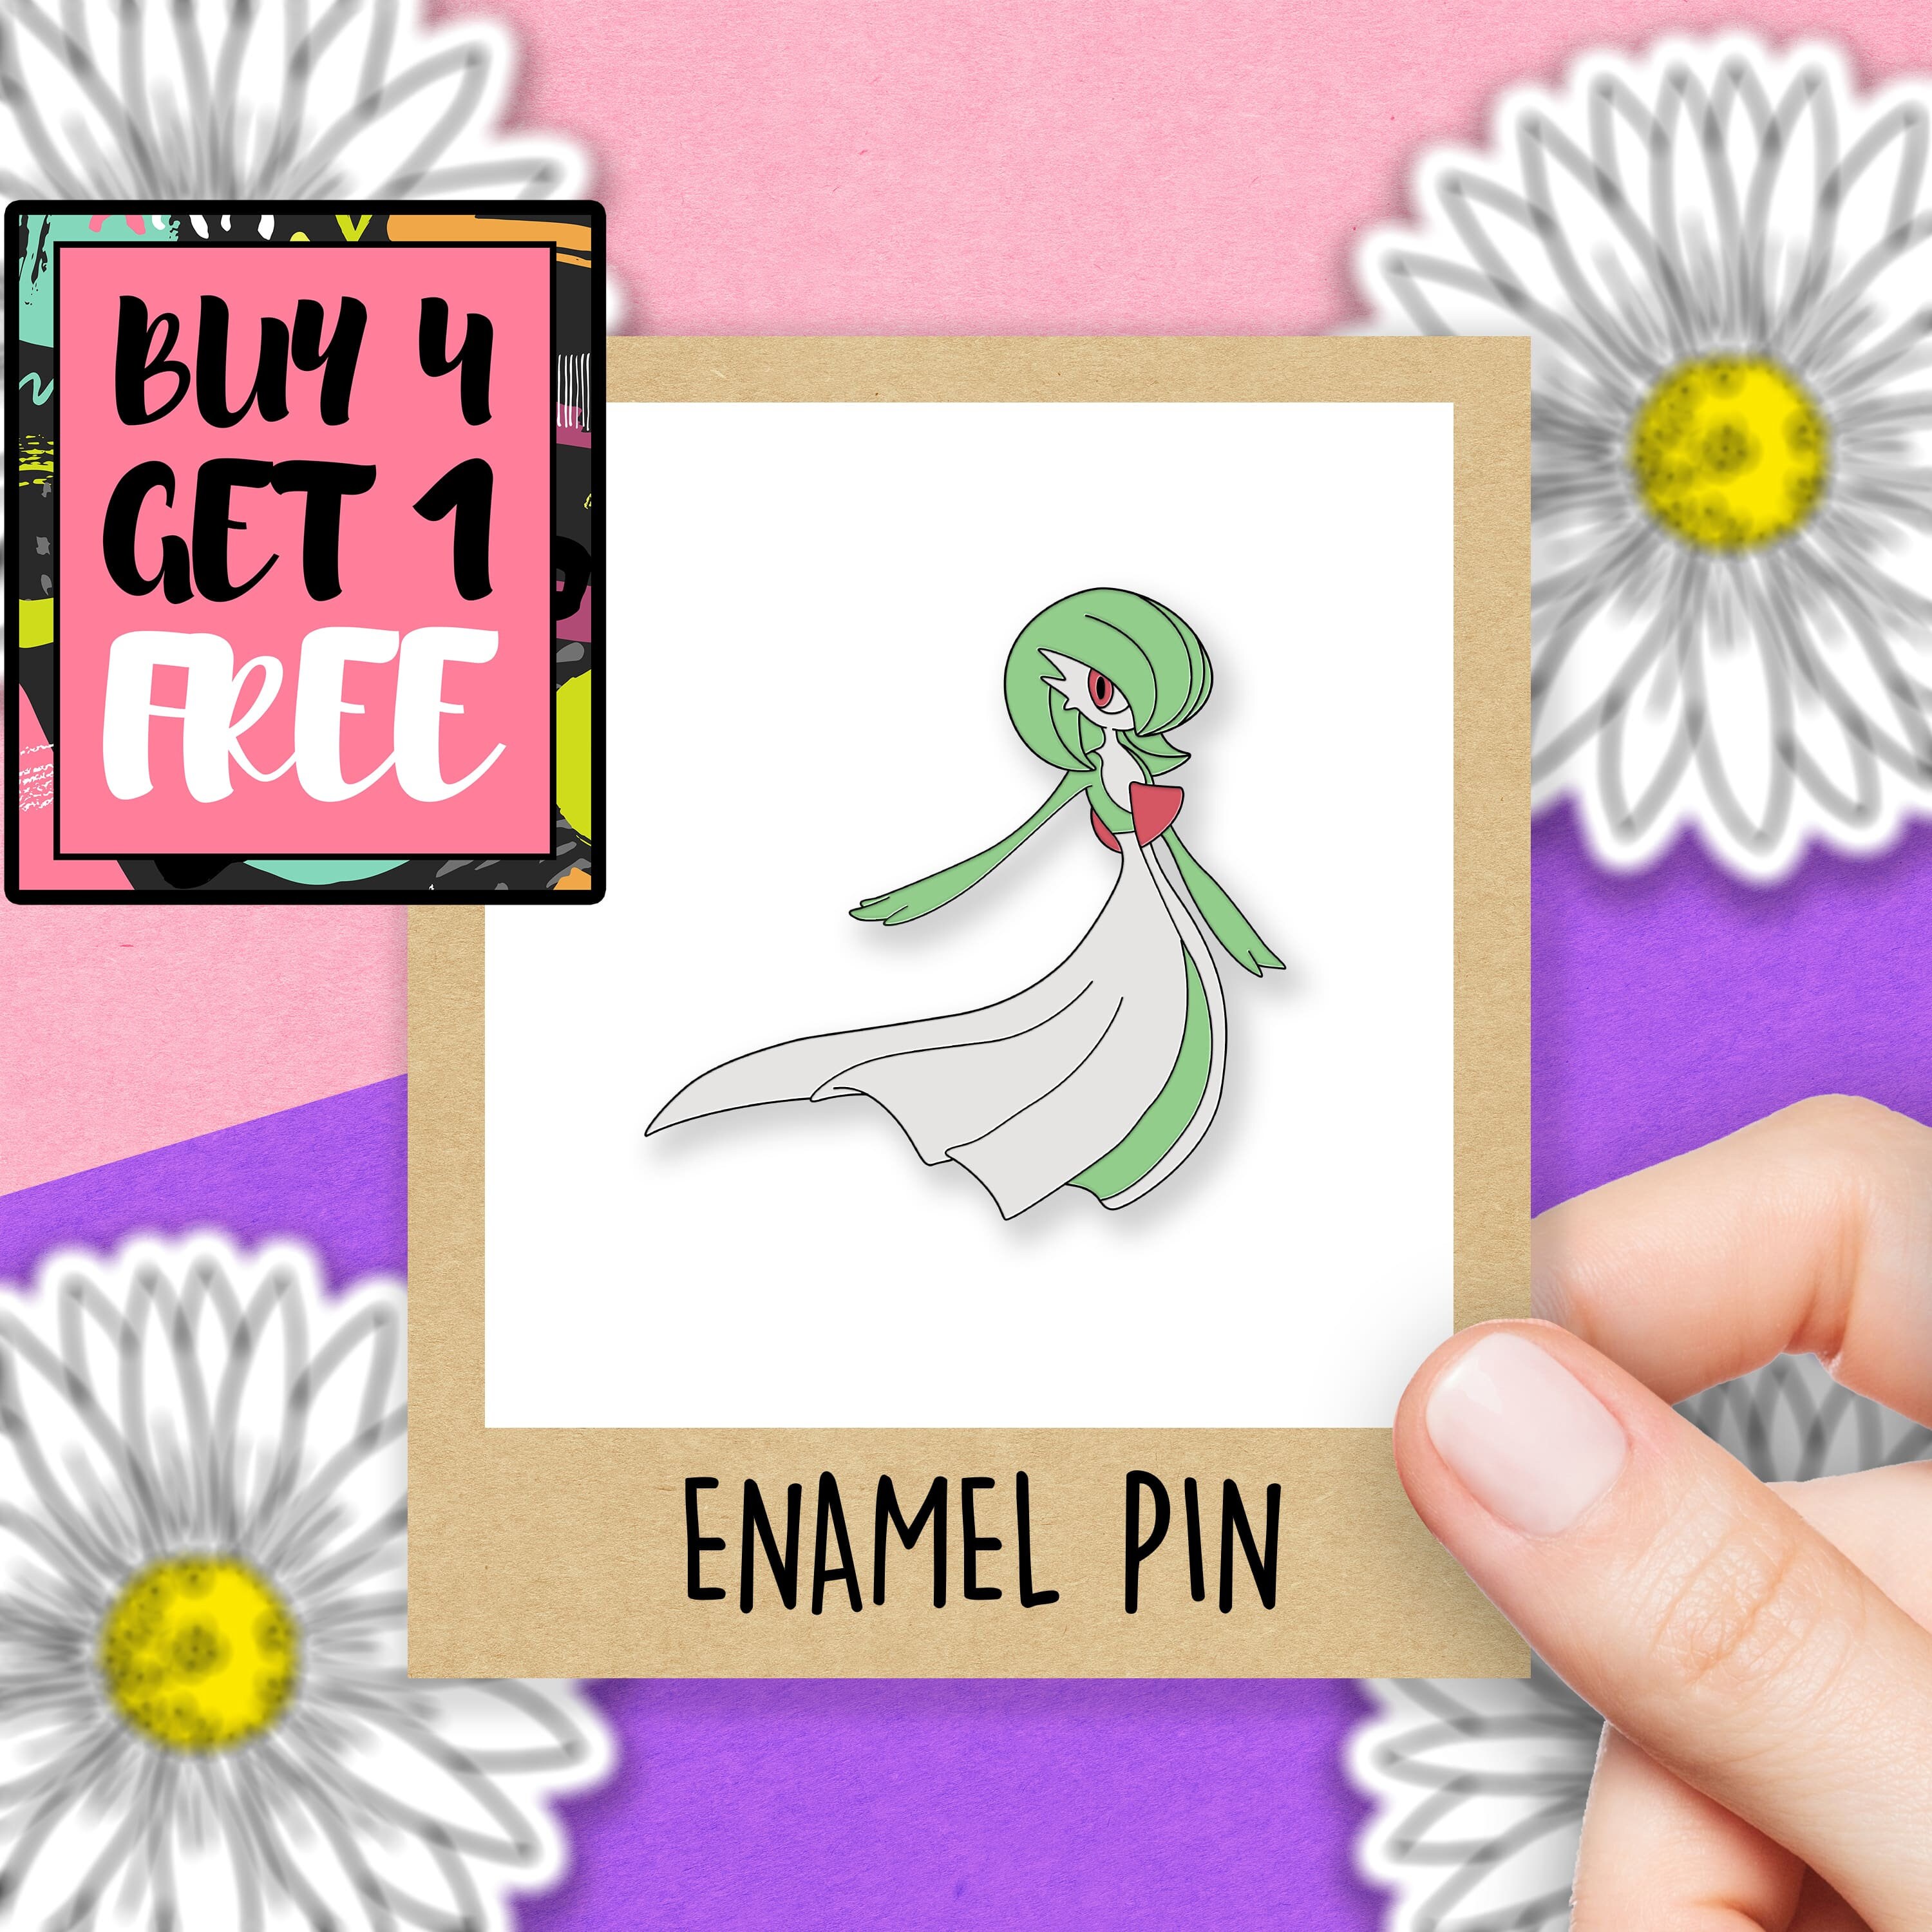 Gardevoir Squid Enamel Pin Pokemon Fairy Enamel Pins Limited Edition Pins Lapel Pin Pins Pin Lapel Pins Pin Badge